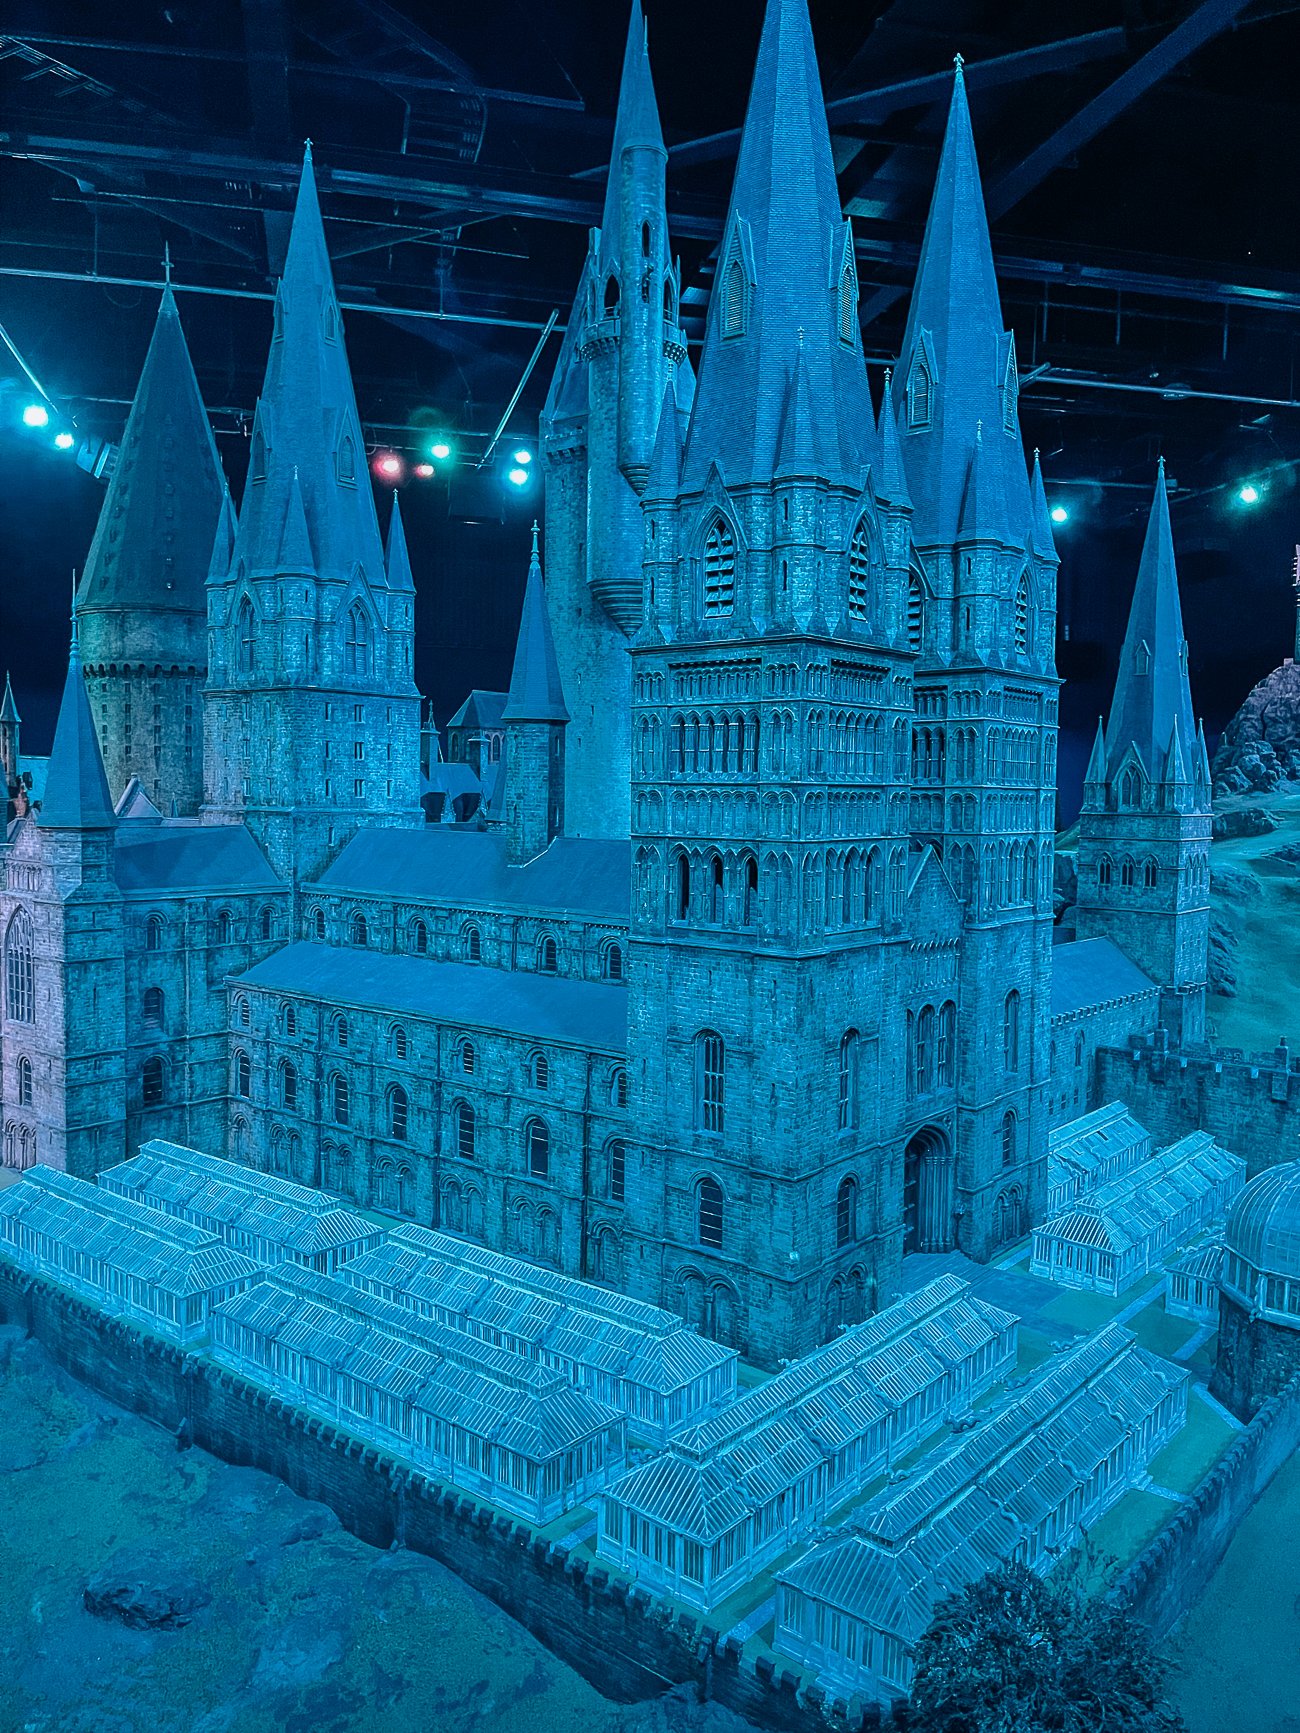 Hogwarts castle diorama in blue evening light